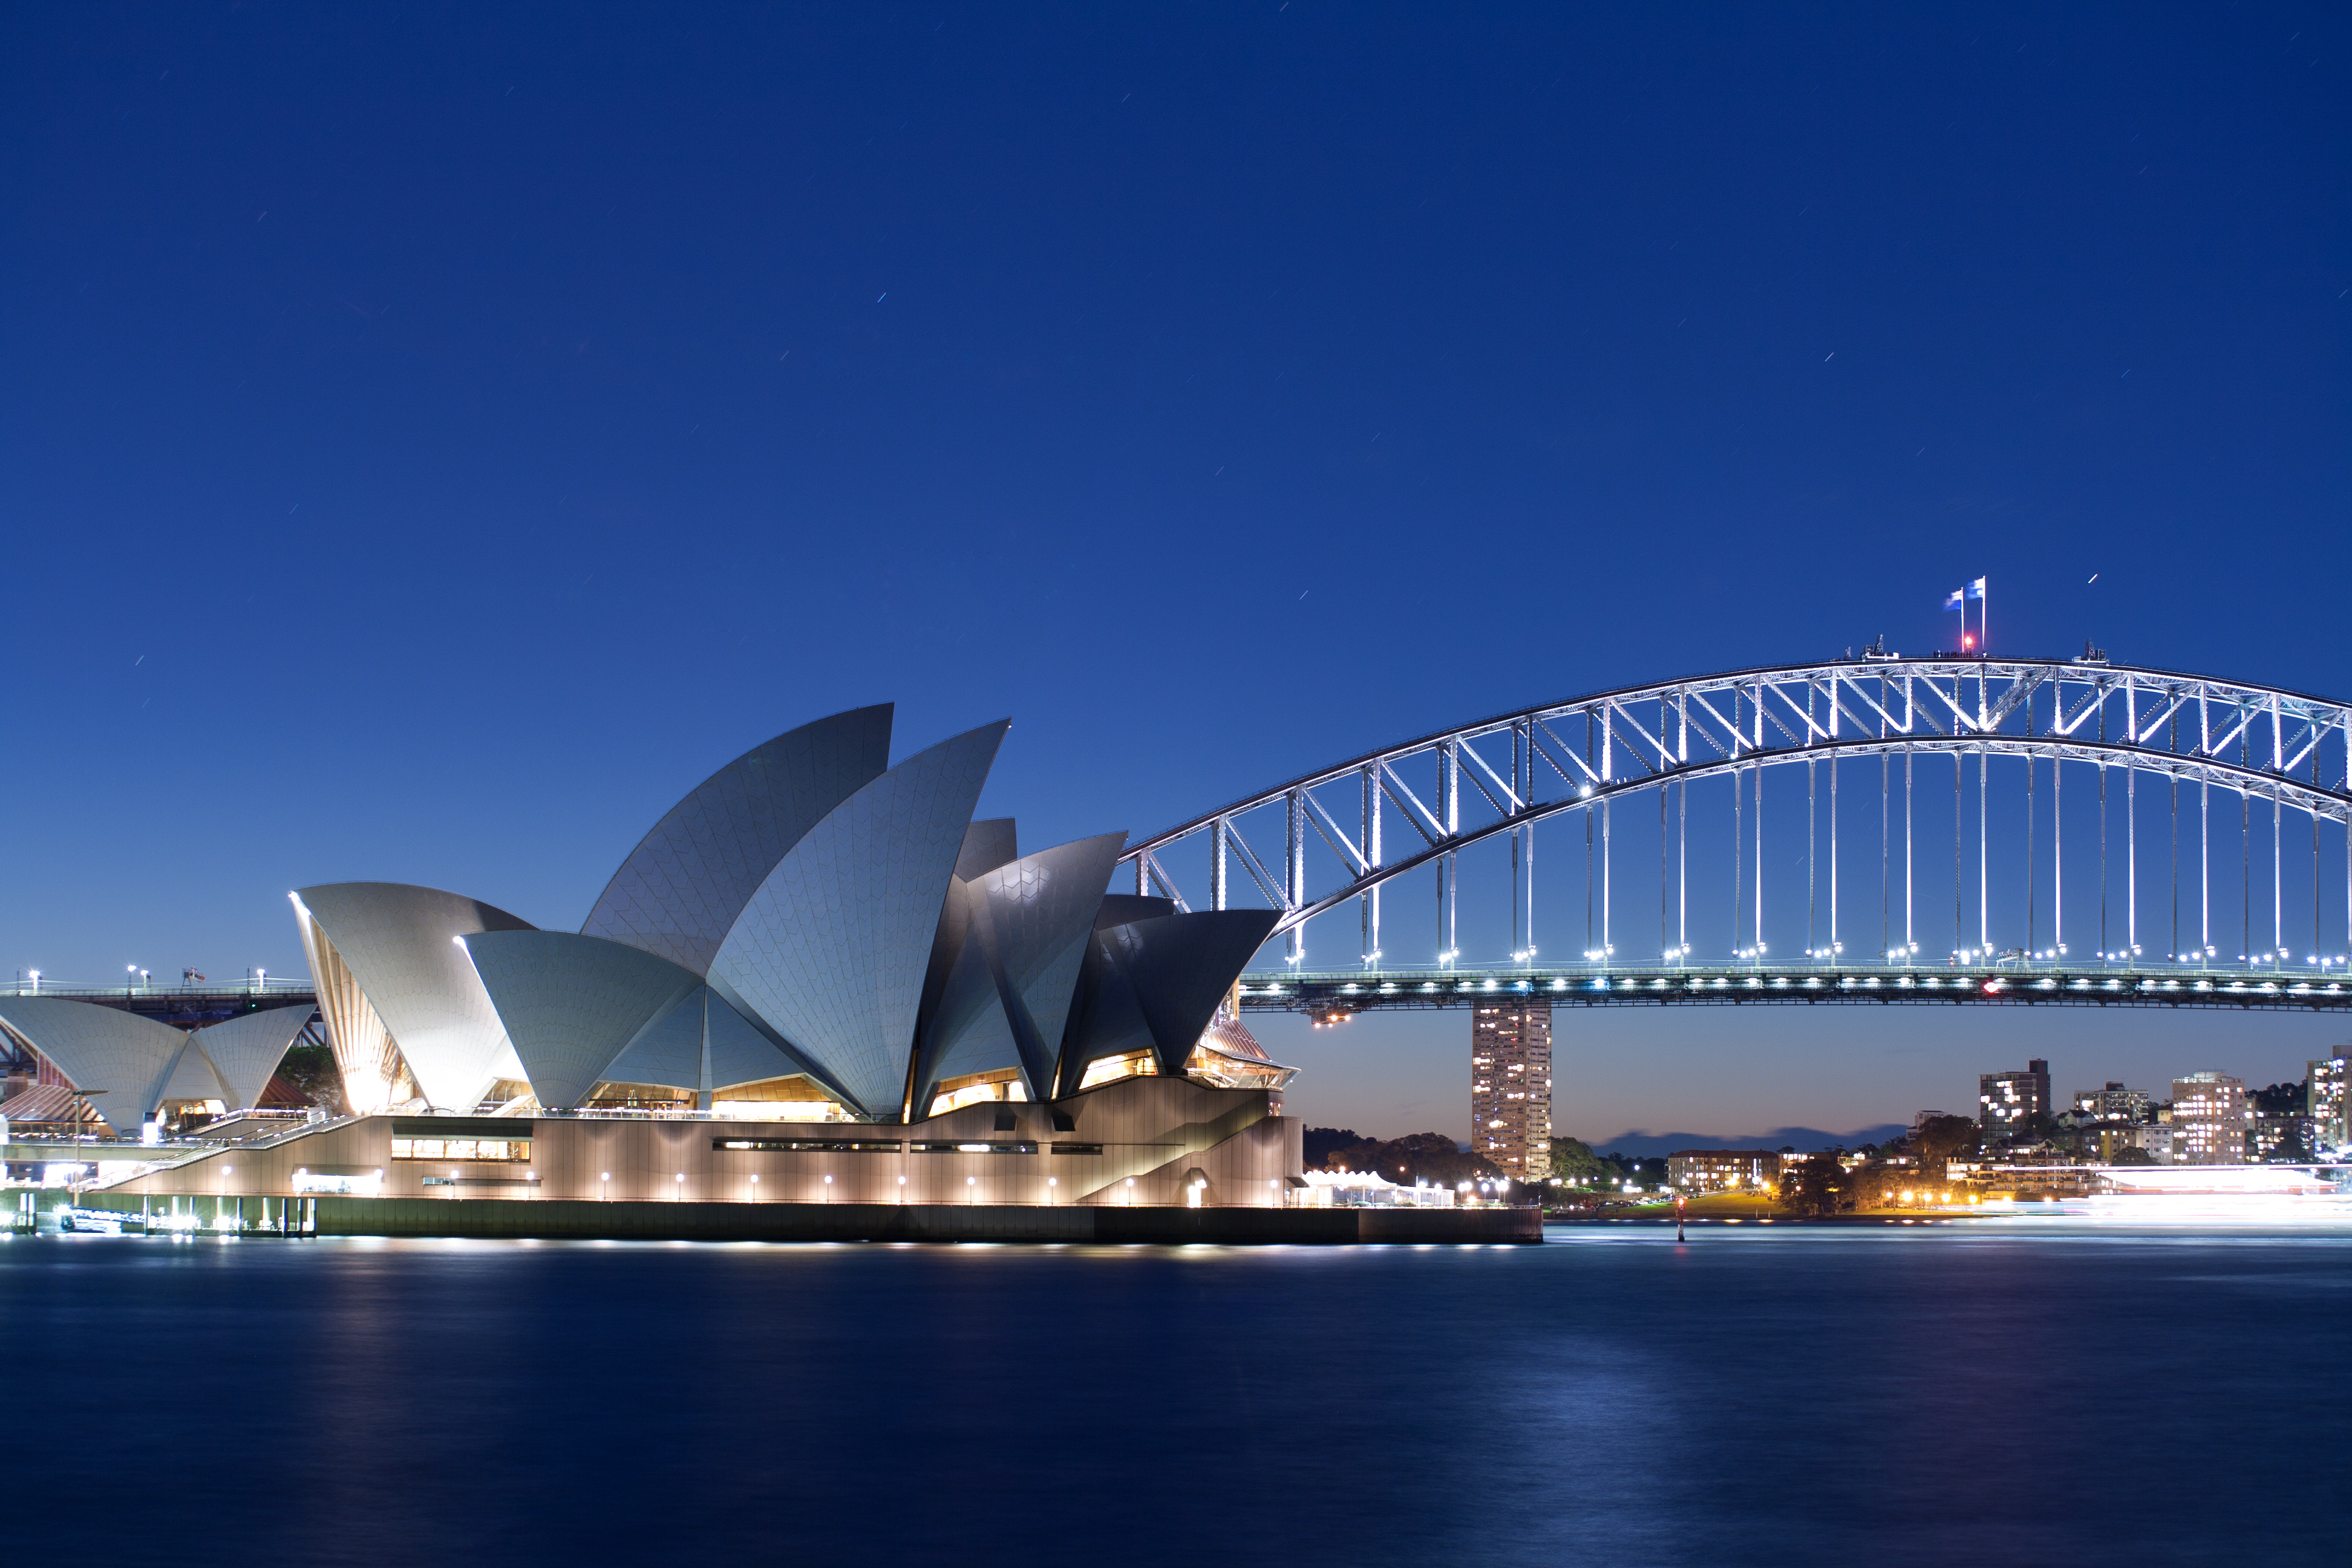 Sydney Backgrounds on Wallpapers Vista